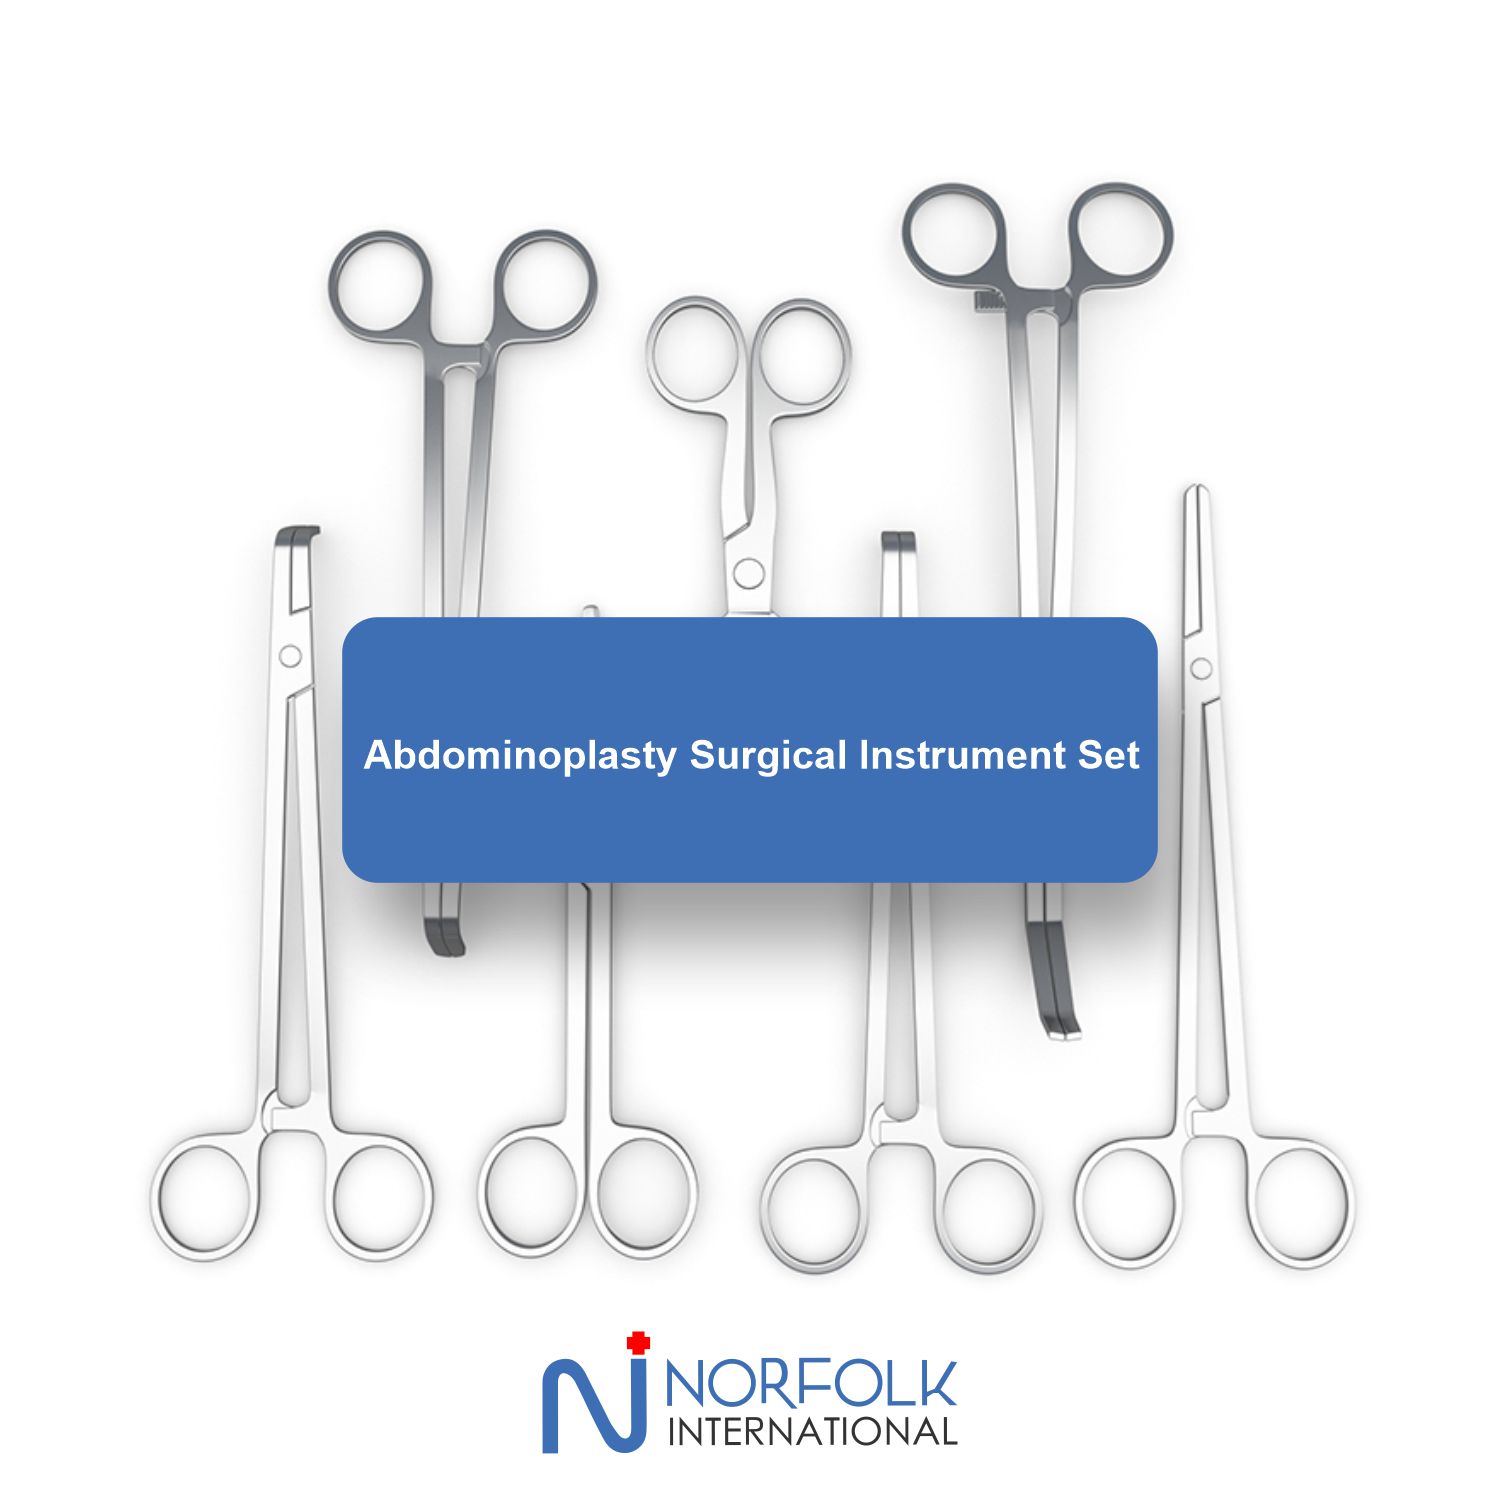 2-Abdominoplasty Surgical Instrument Set